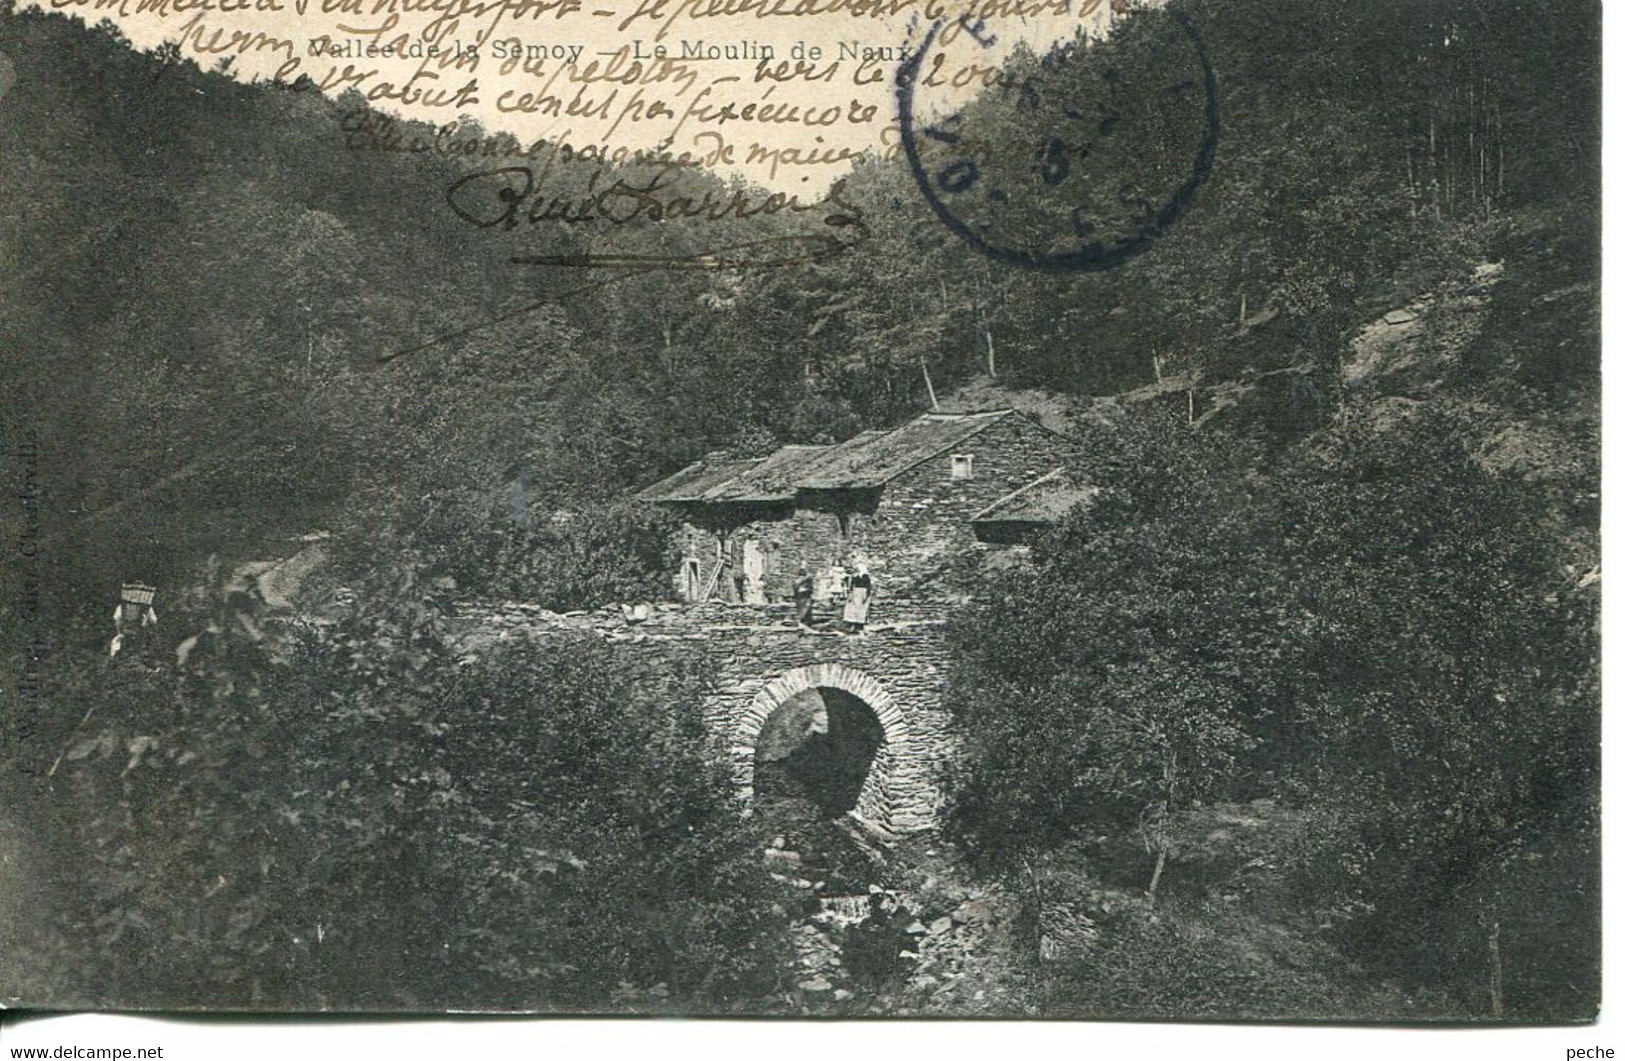 N°4599 R -cpa Vallée De La Samoy -le Moulin De Naux- - Water Mills